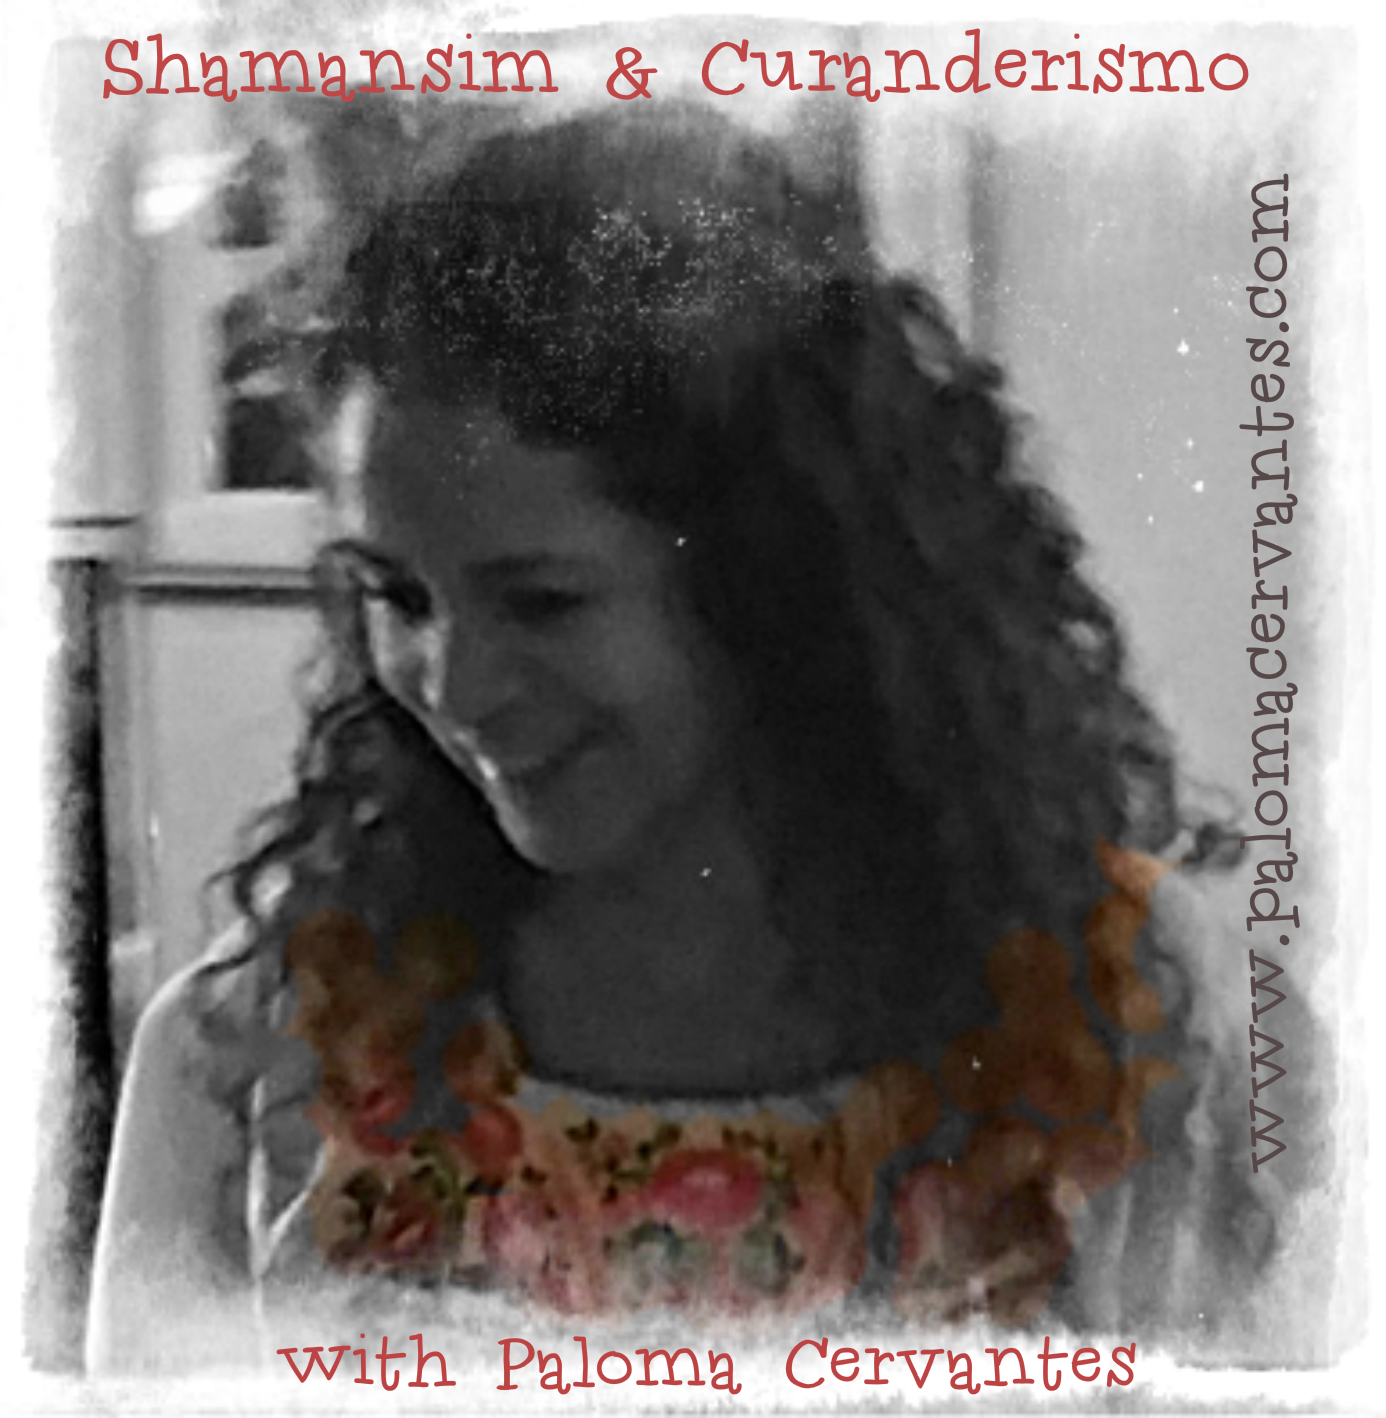 Shamanism & curanderismo with Paloma Cervantes